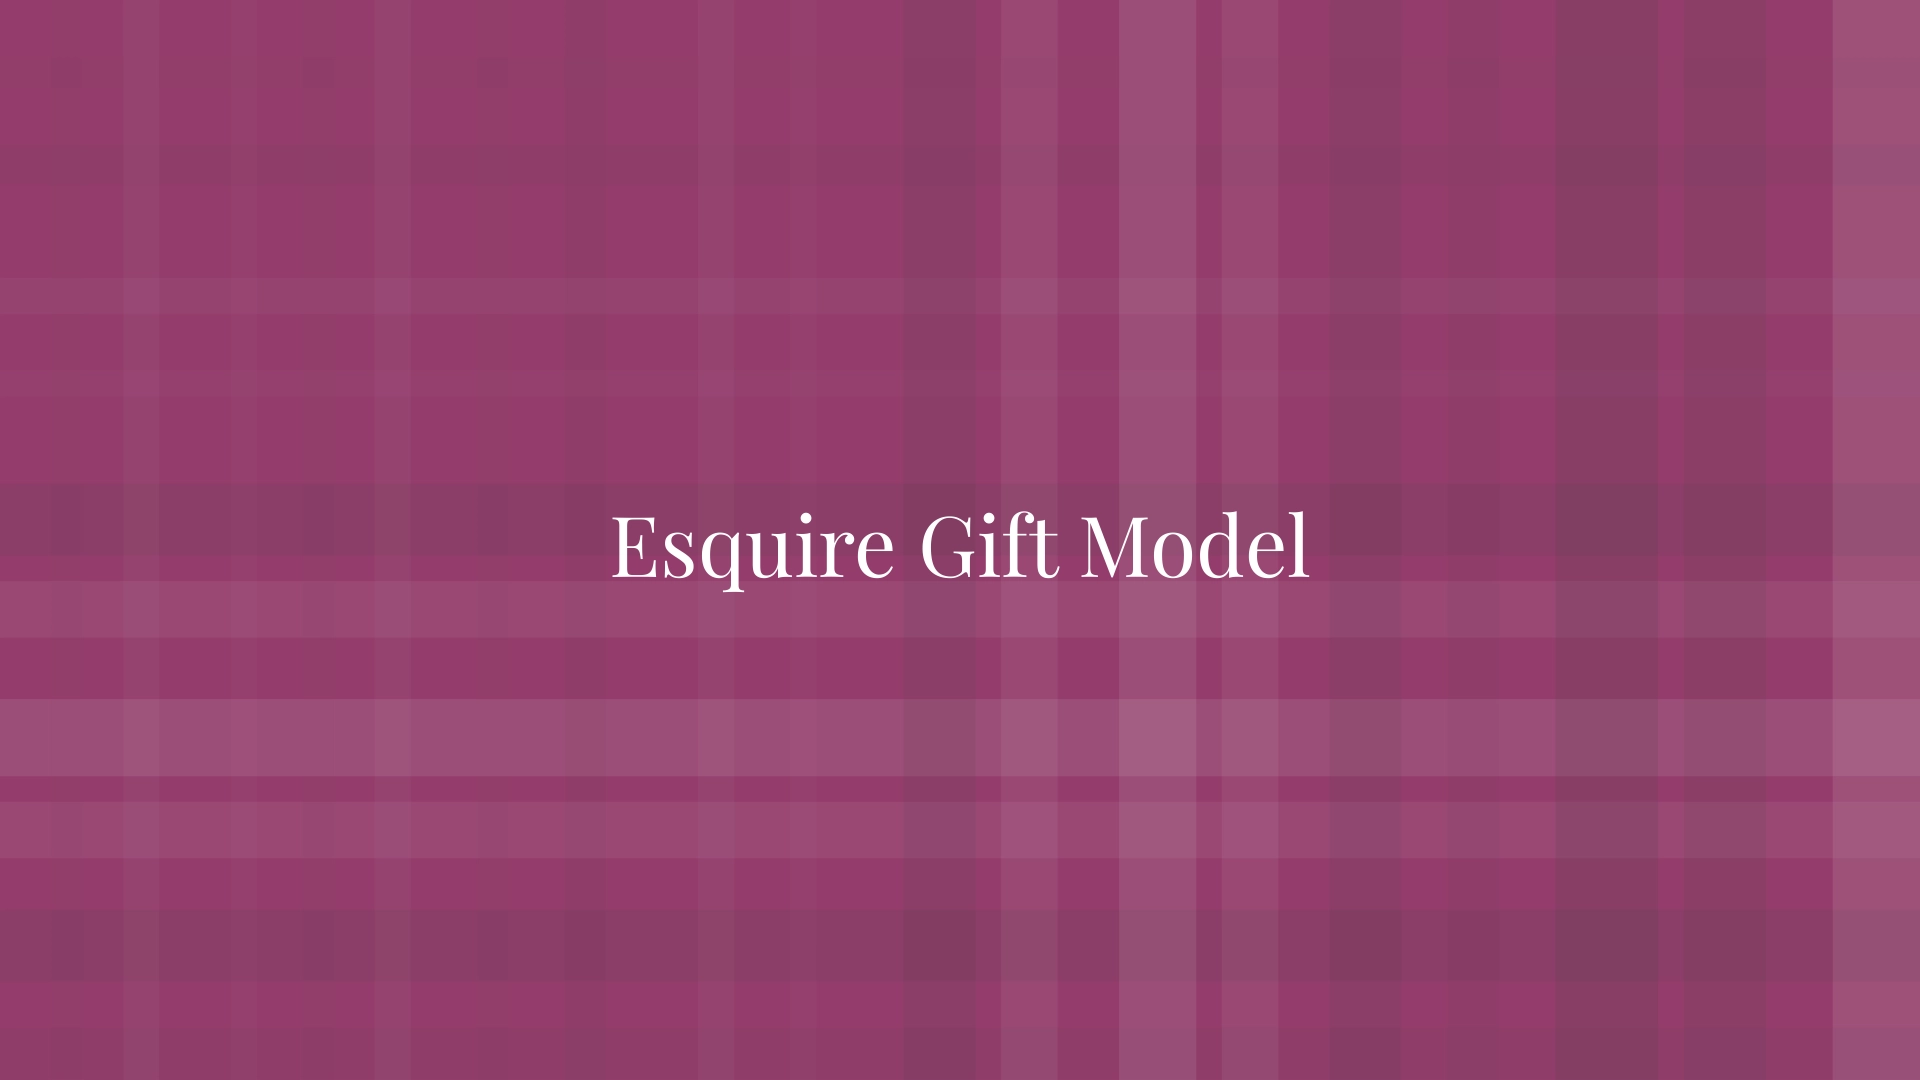 Modelo de regalo de Esquire